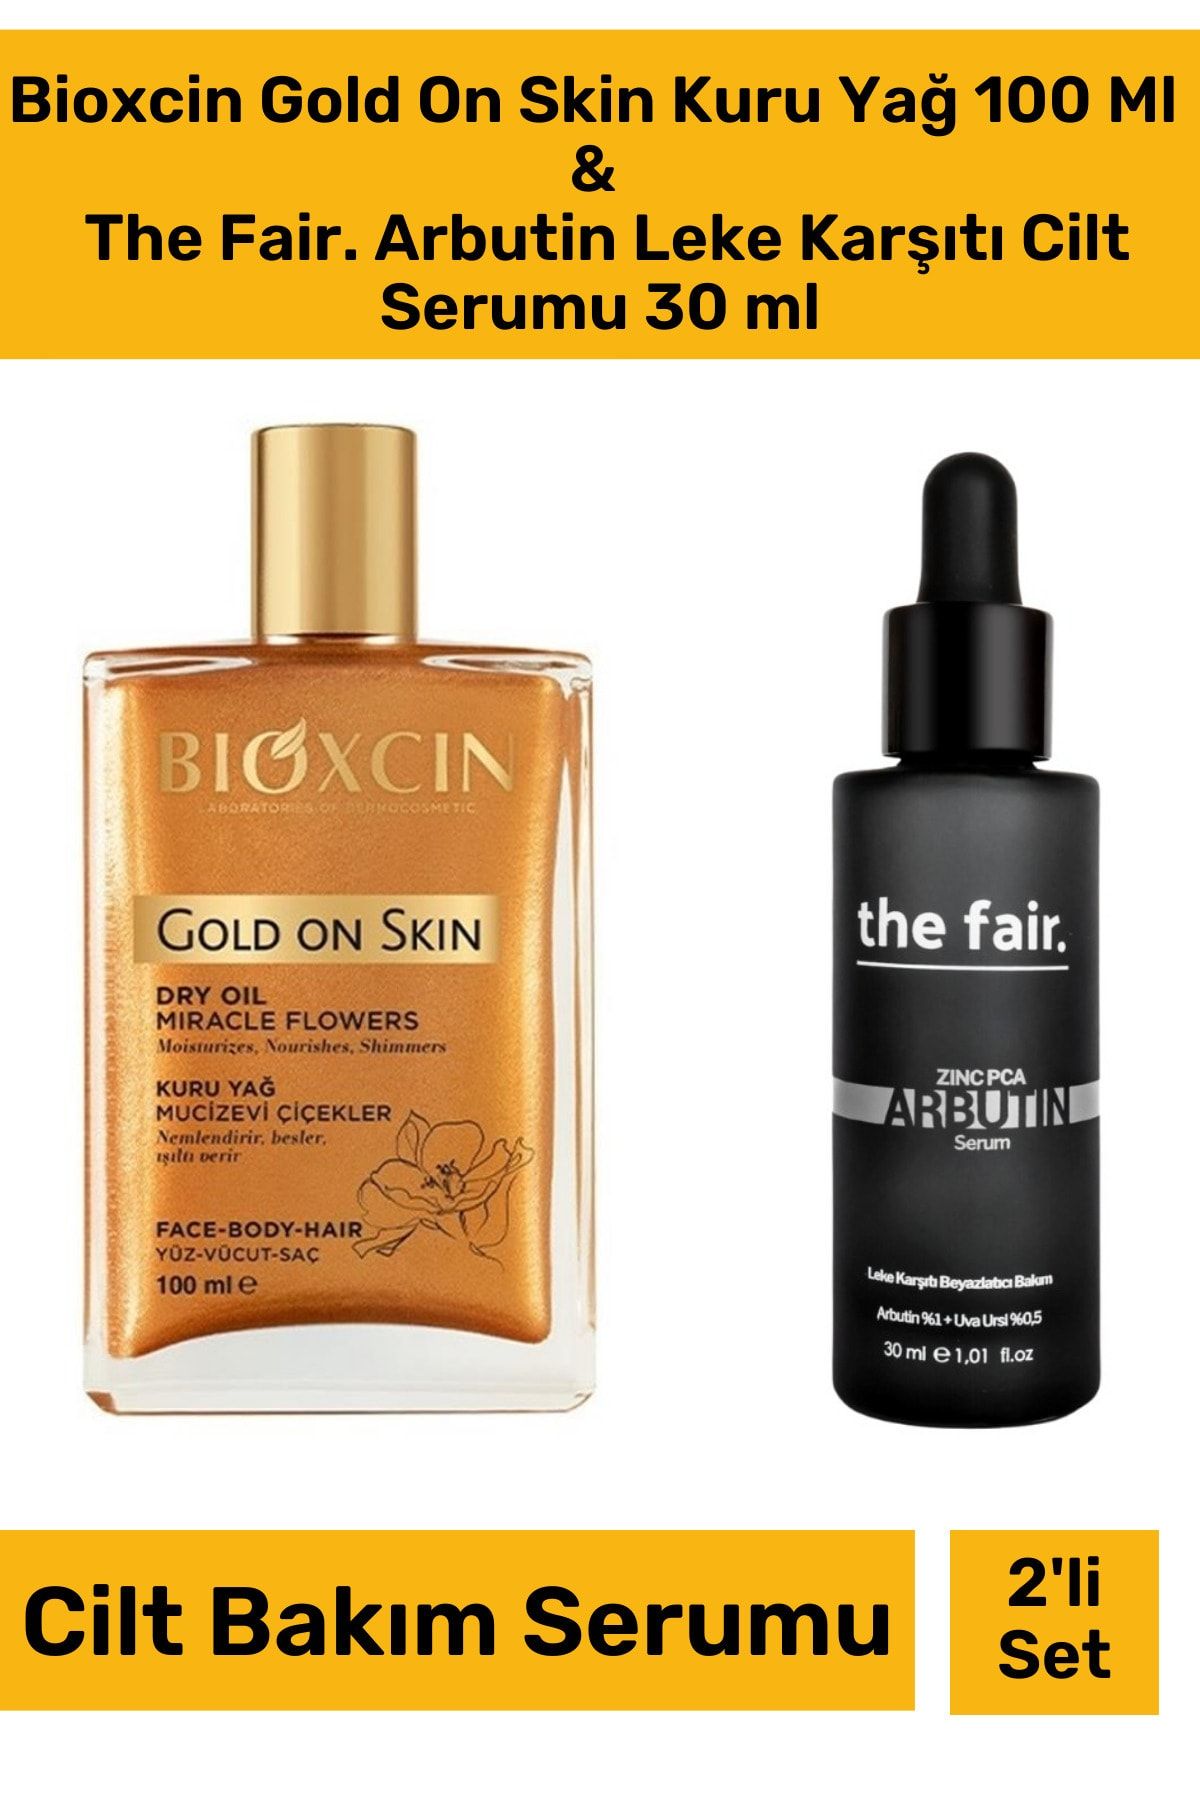 Bioxcin Gold On Skin Kuru Yağ 100 Ml & The Fair. Arbutin Leke Karşıtı Cilt Serumu 30 ml